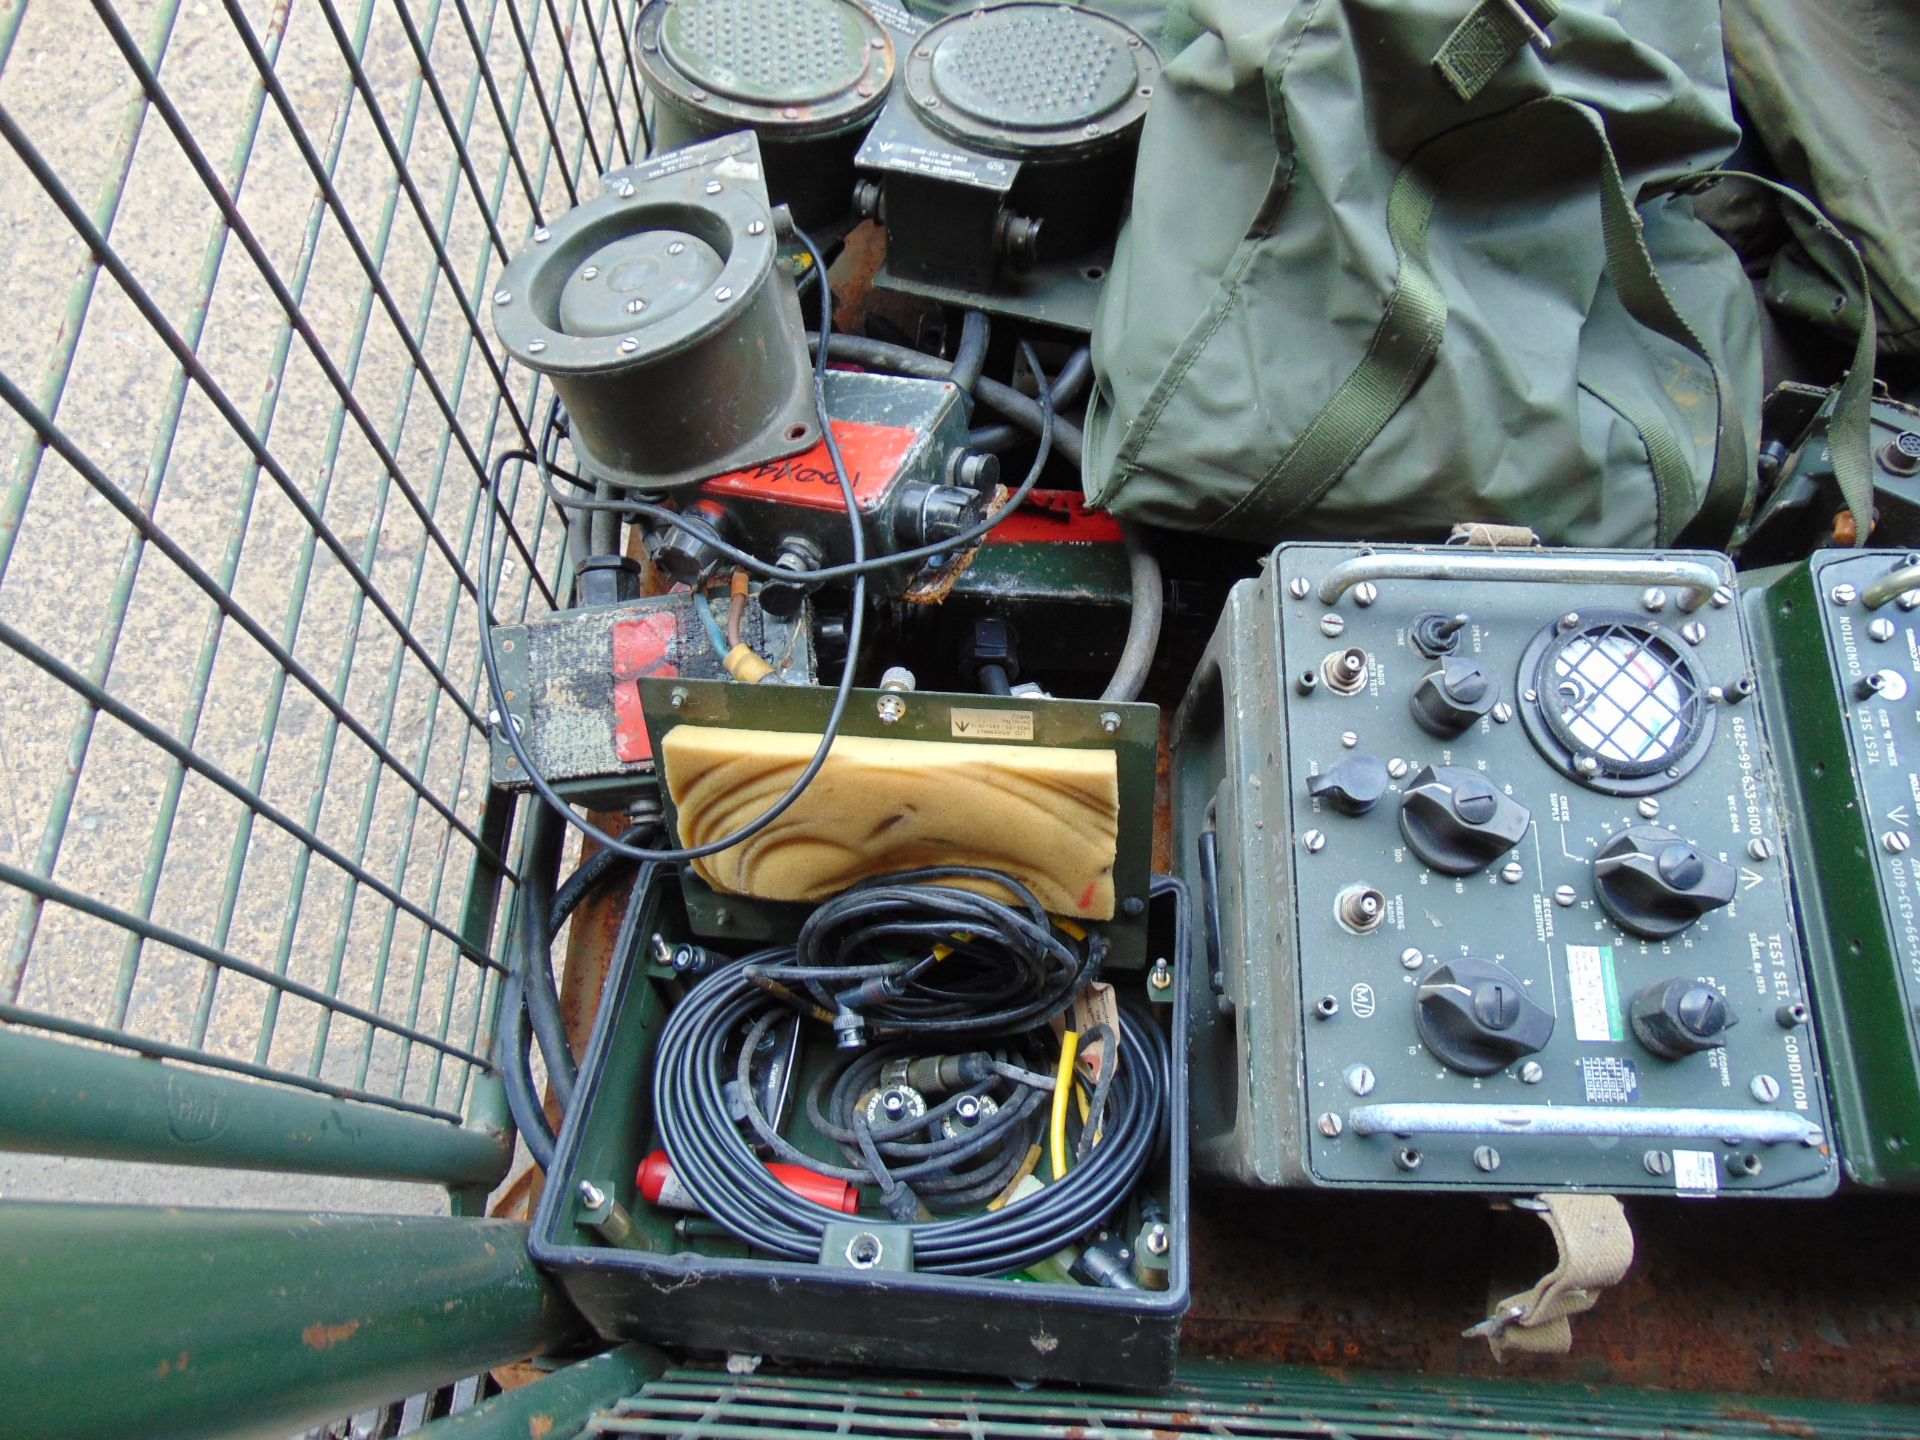 1 x Stillage of Clansman Radio Equipment Inc Antennas, Speaker, Test Sets, Chargers etc - Image 6 of 10